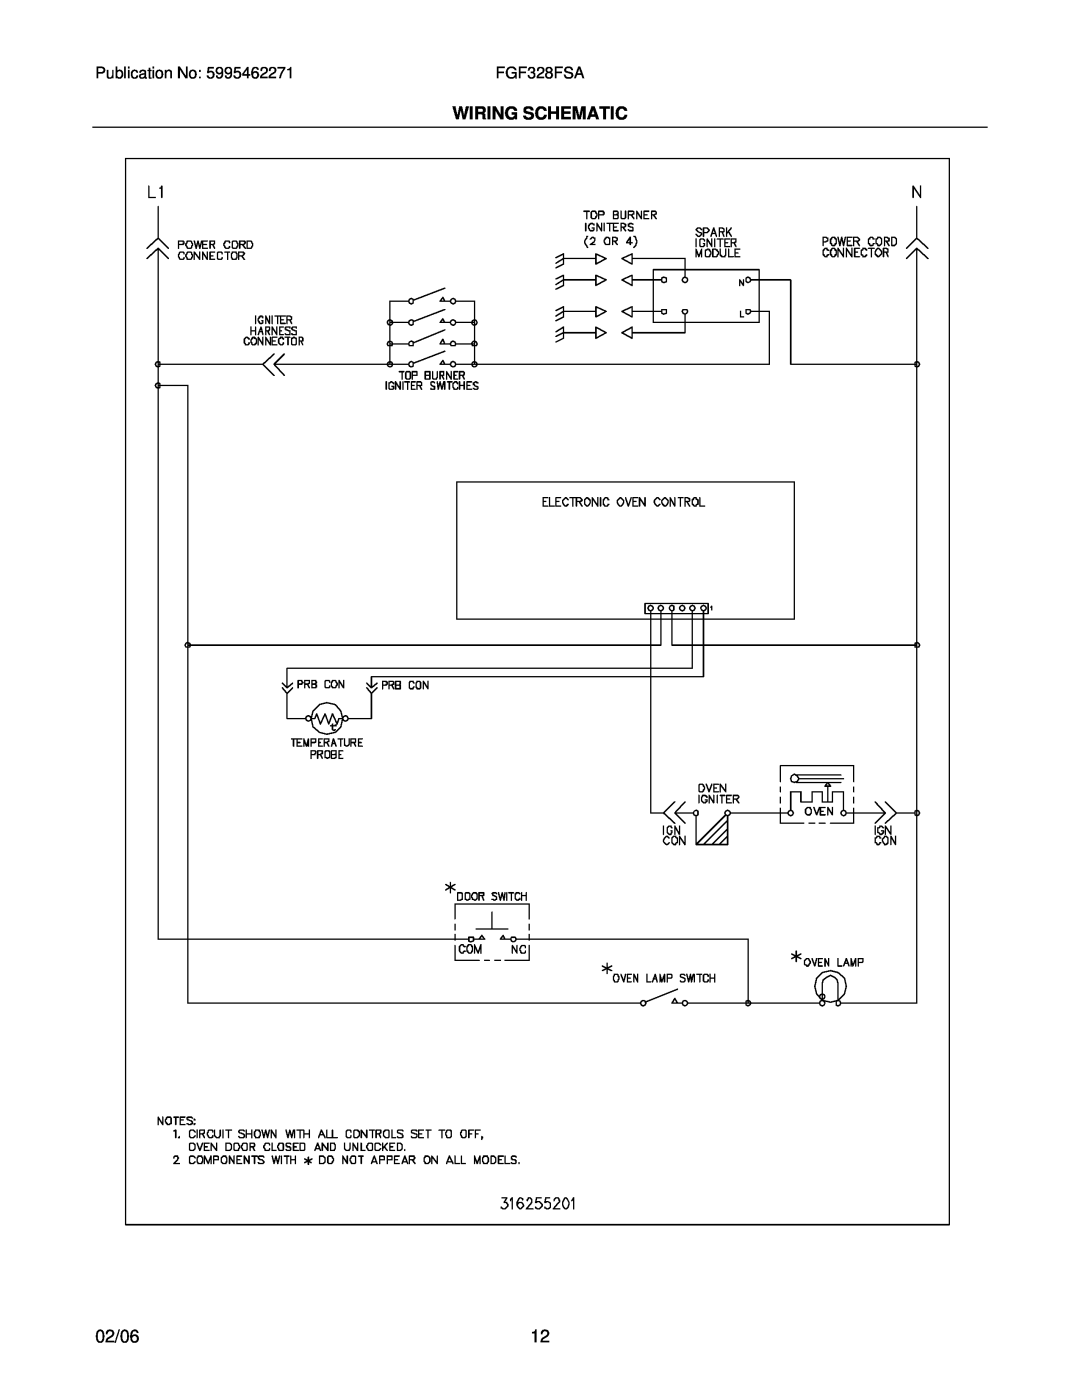 Frigidaire FGF328F installation instructions Wiring Schematic, 02/06 